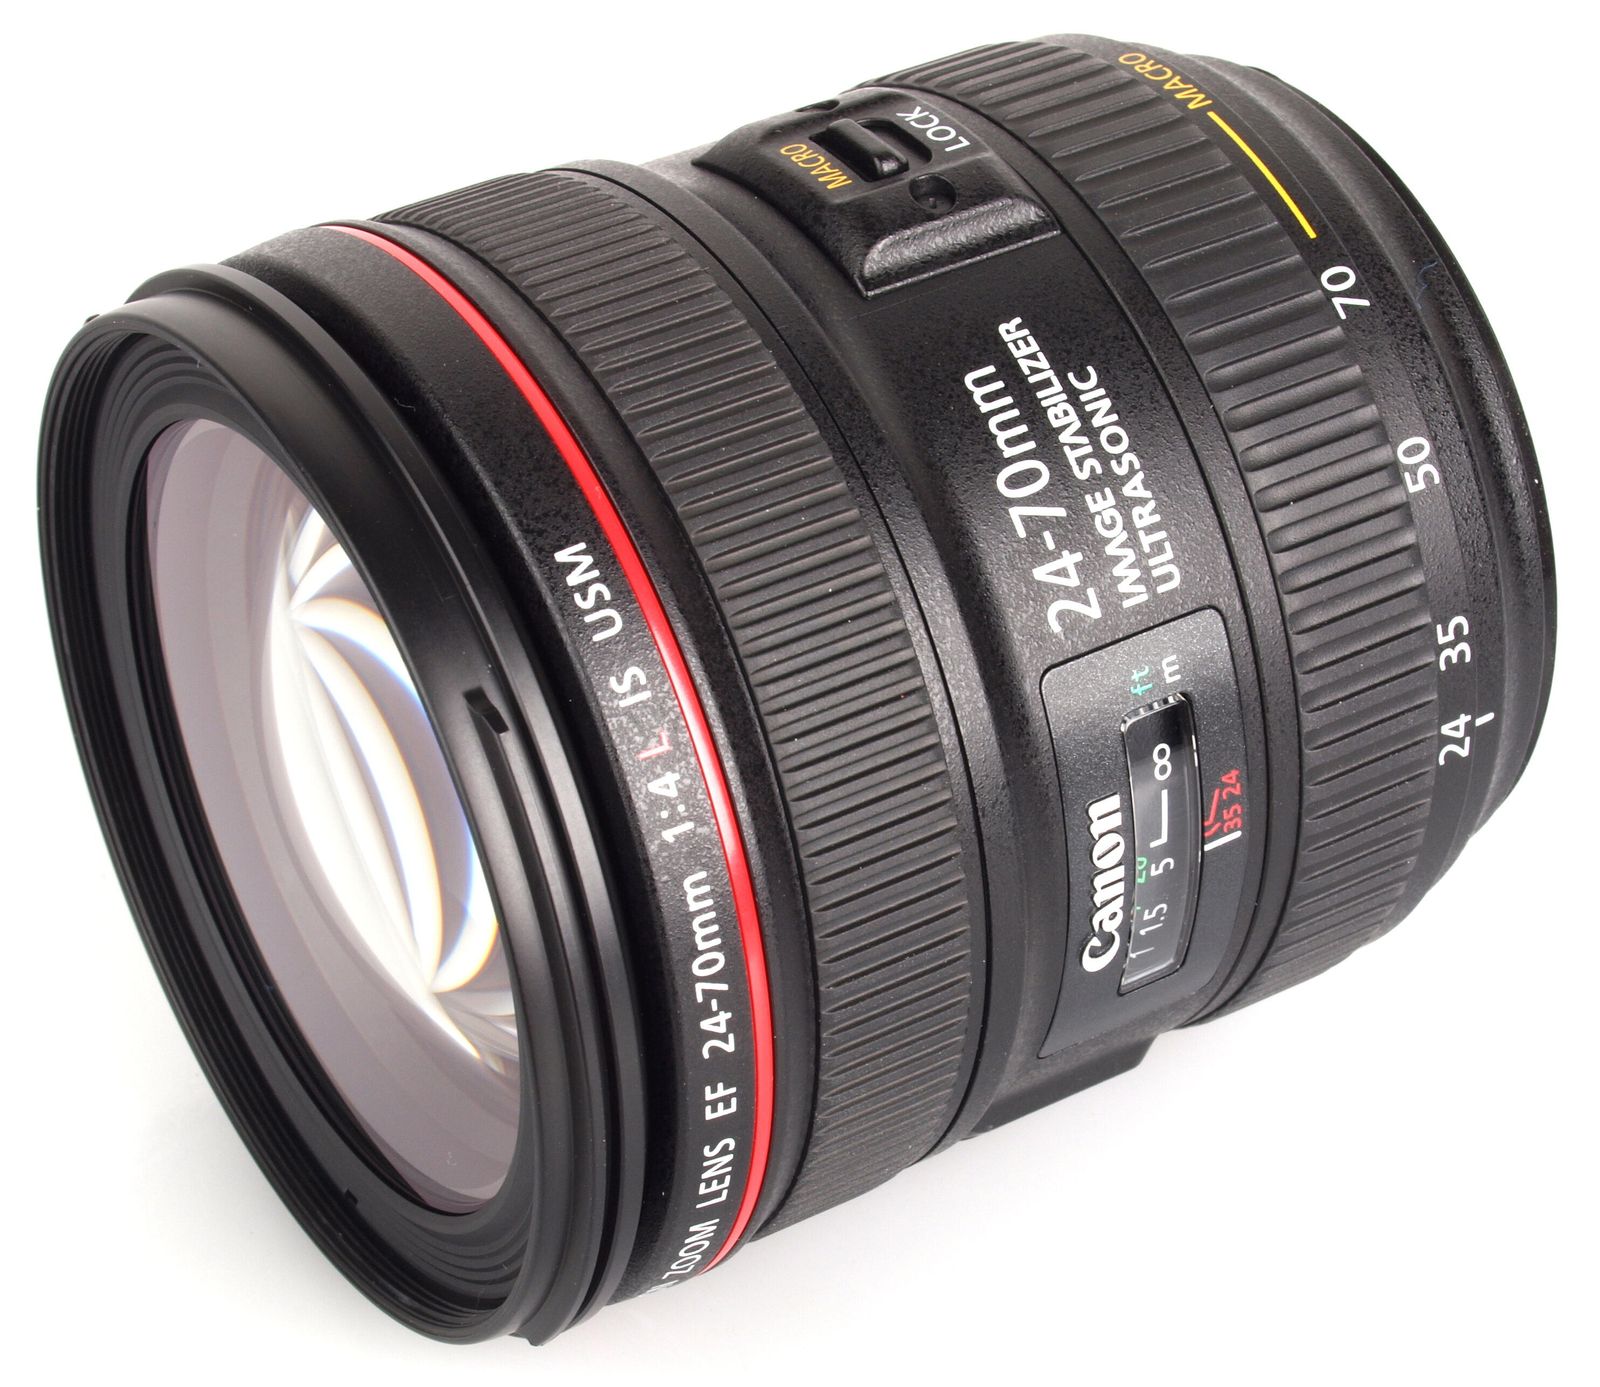 Canon EF 24-70mm f/4L USM Lens Review